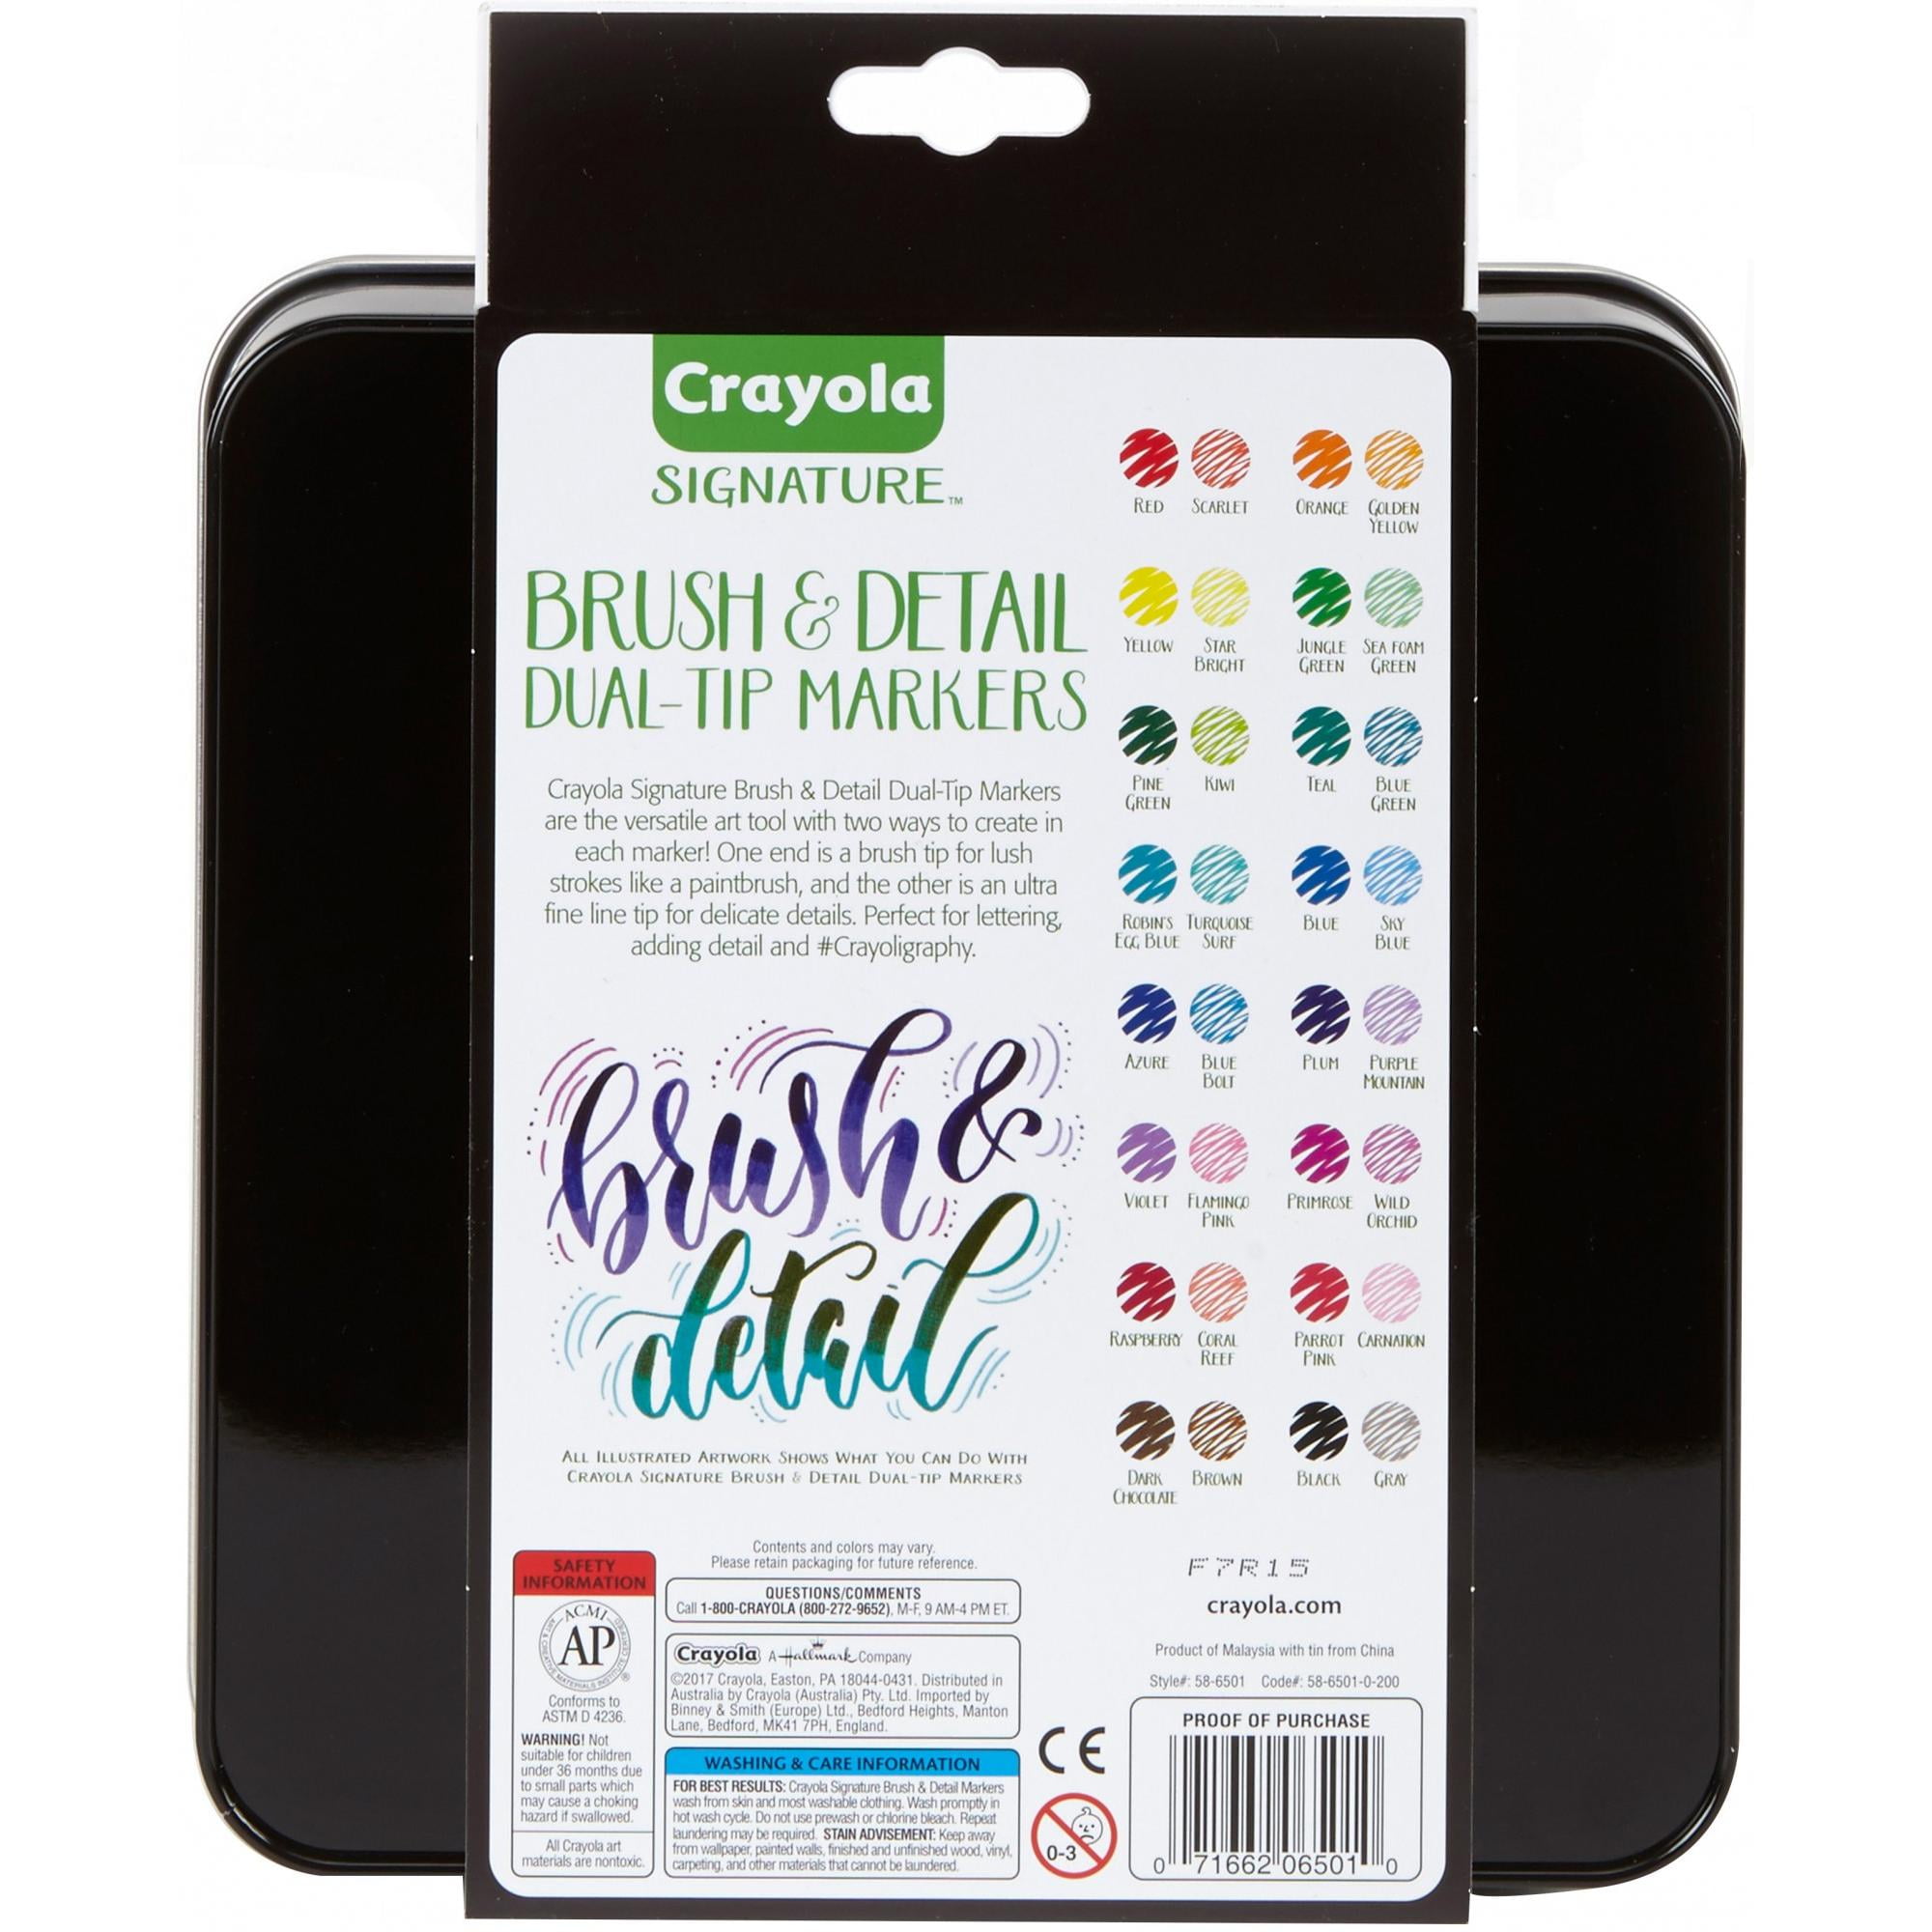 Crayola® Signature™ Blending Markers, 16ct.